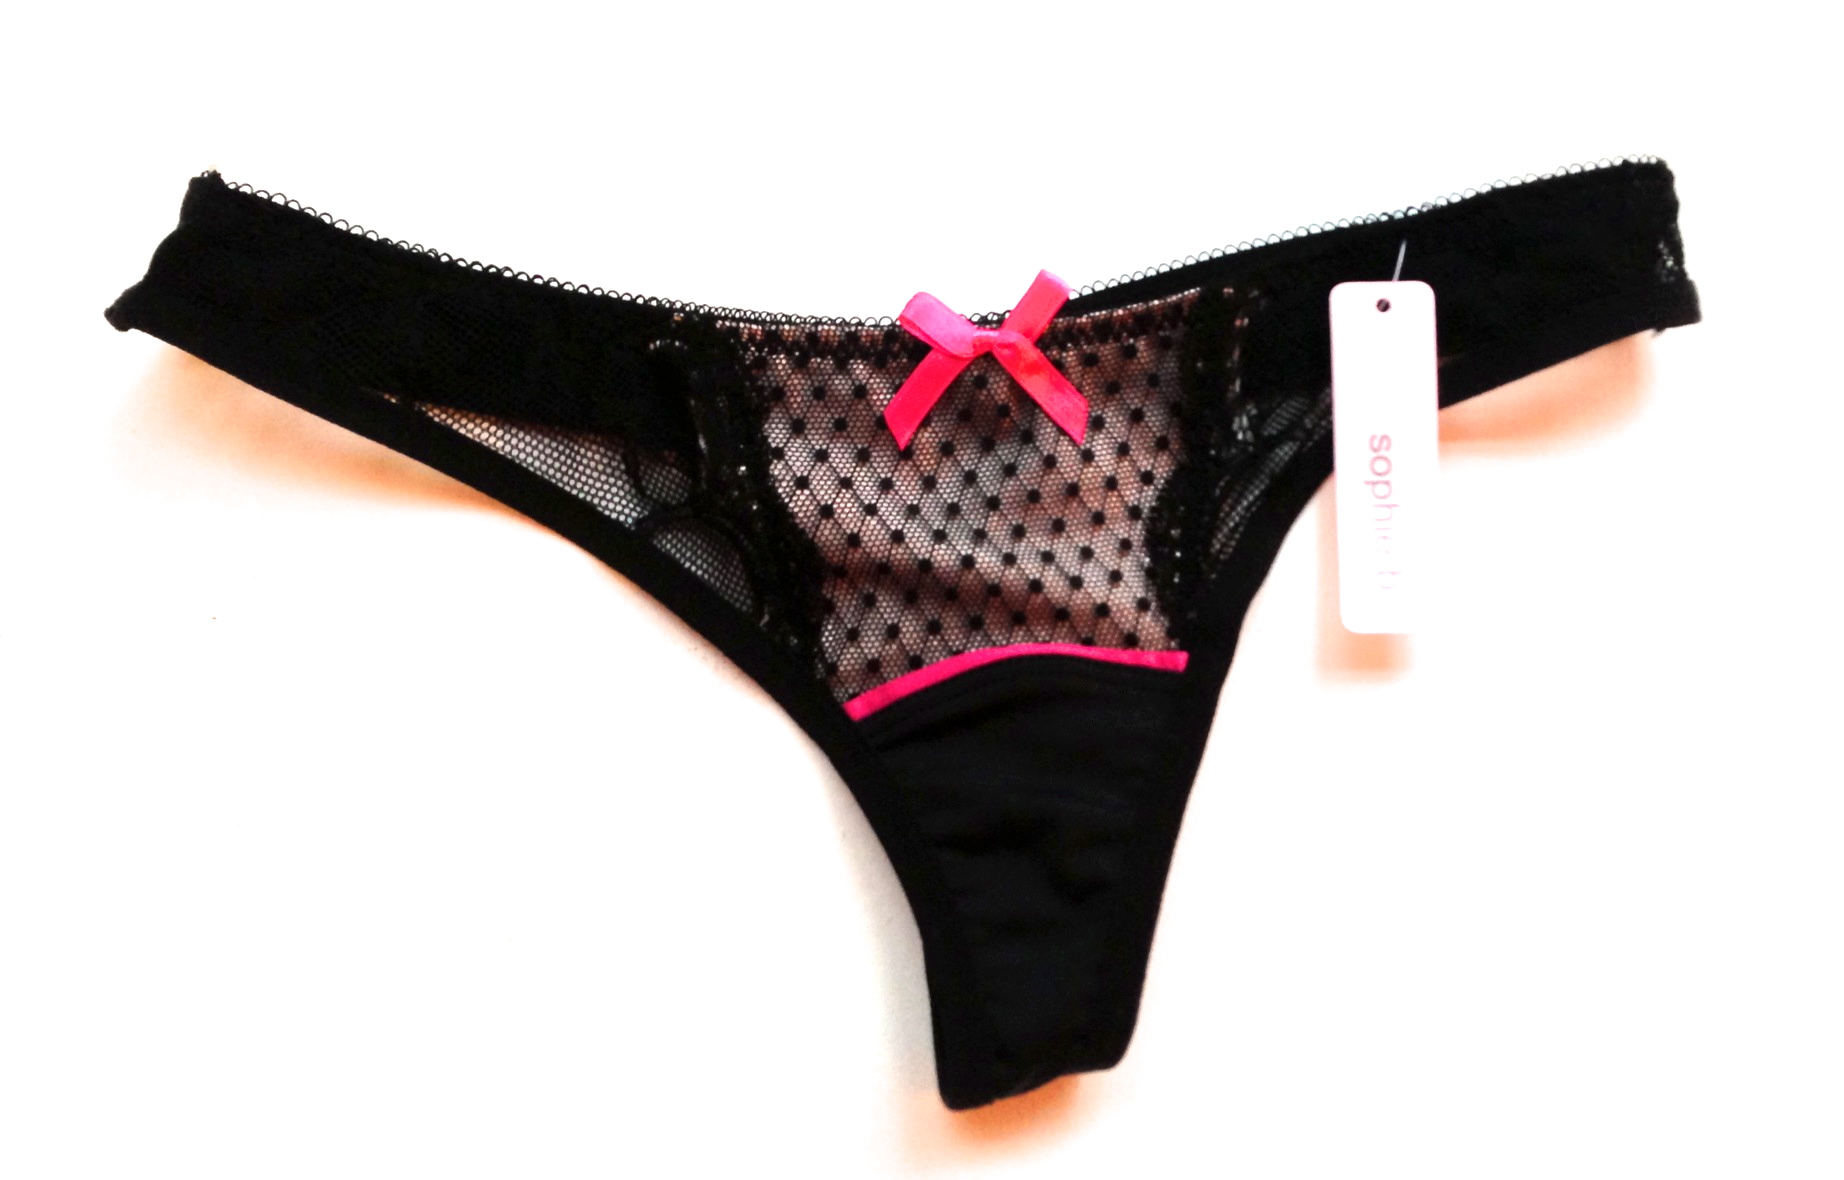 Lingerie review of The Sophie B underwear 'Underlying Secrets' Bra & Panty